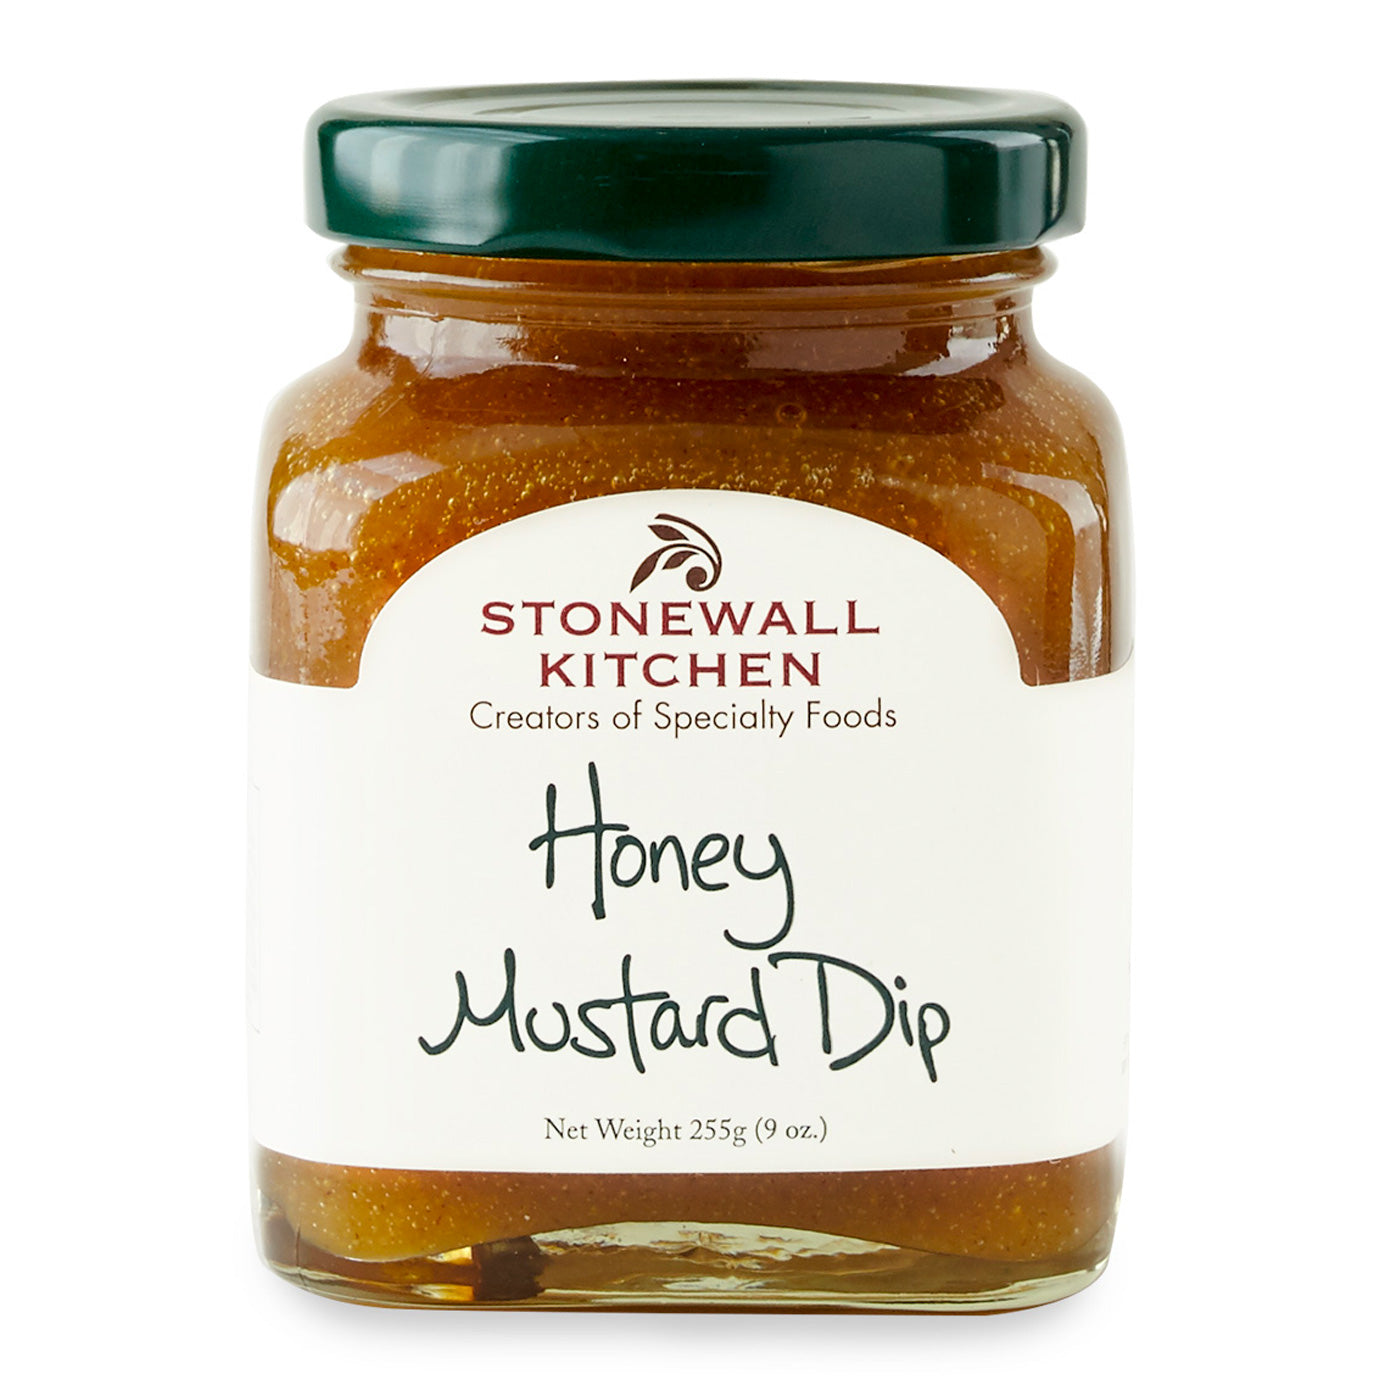 Stonewall Kitchen Honey Mustard